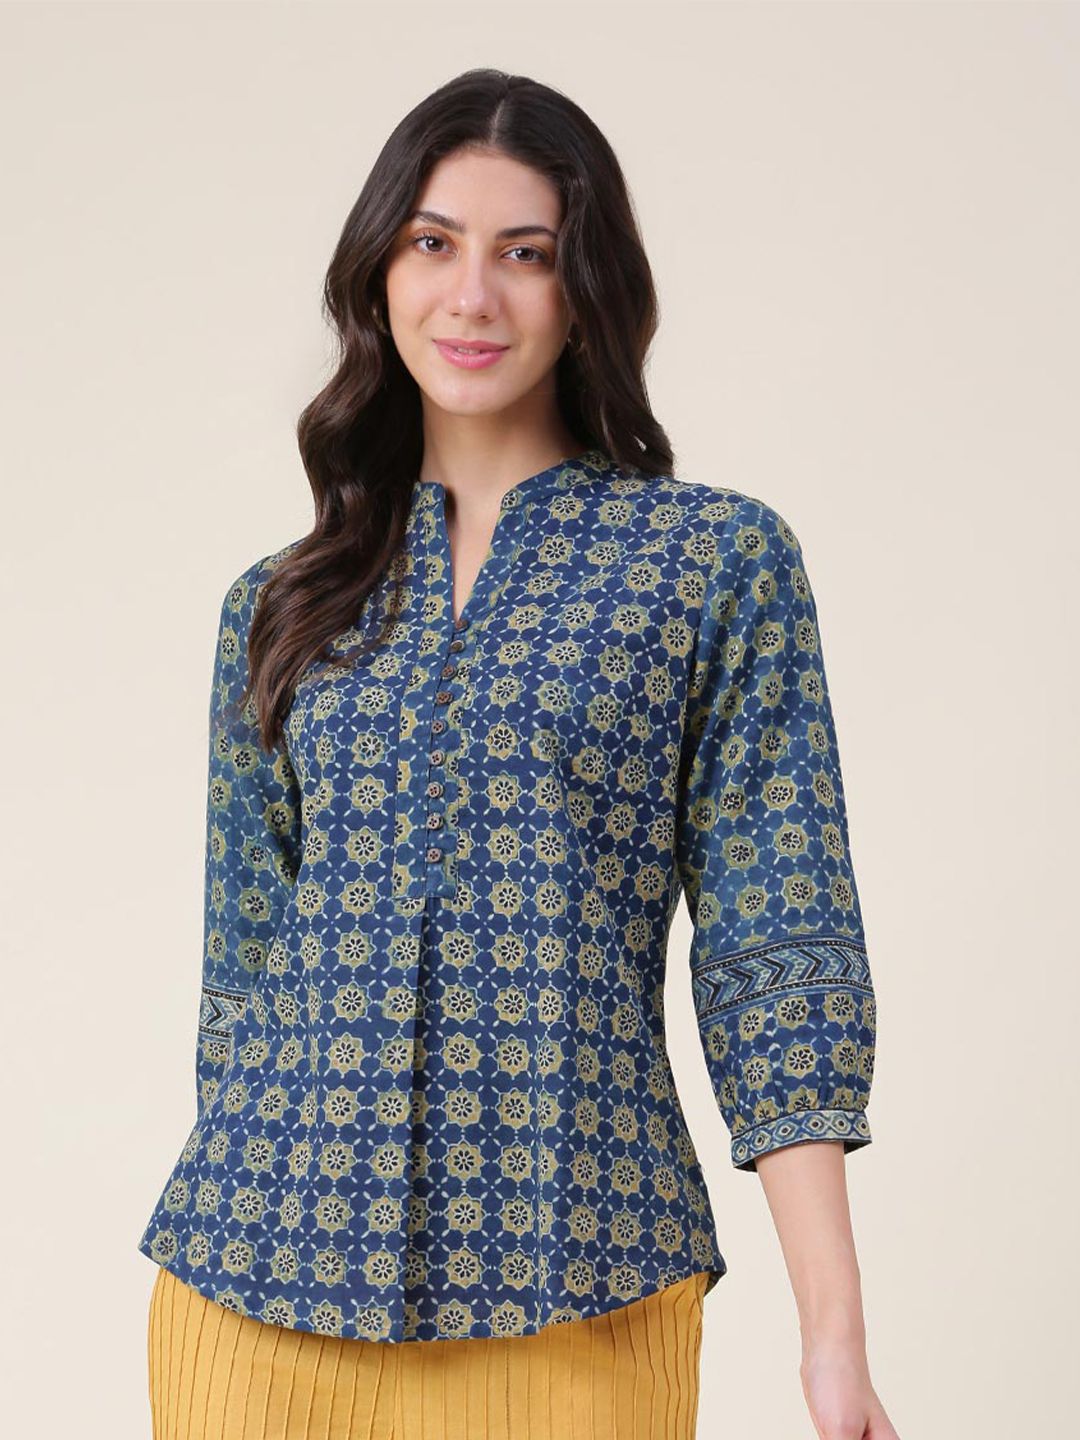 Fabindia Floral Print Mandarin Collar Cotton Shirt Style Top Price in India